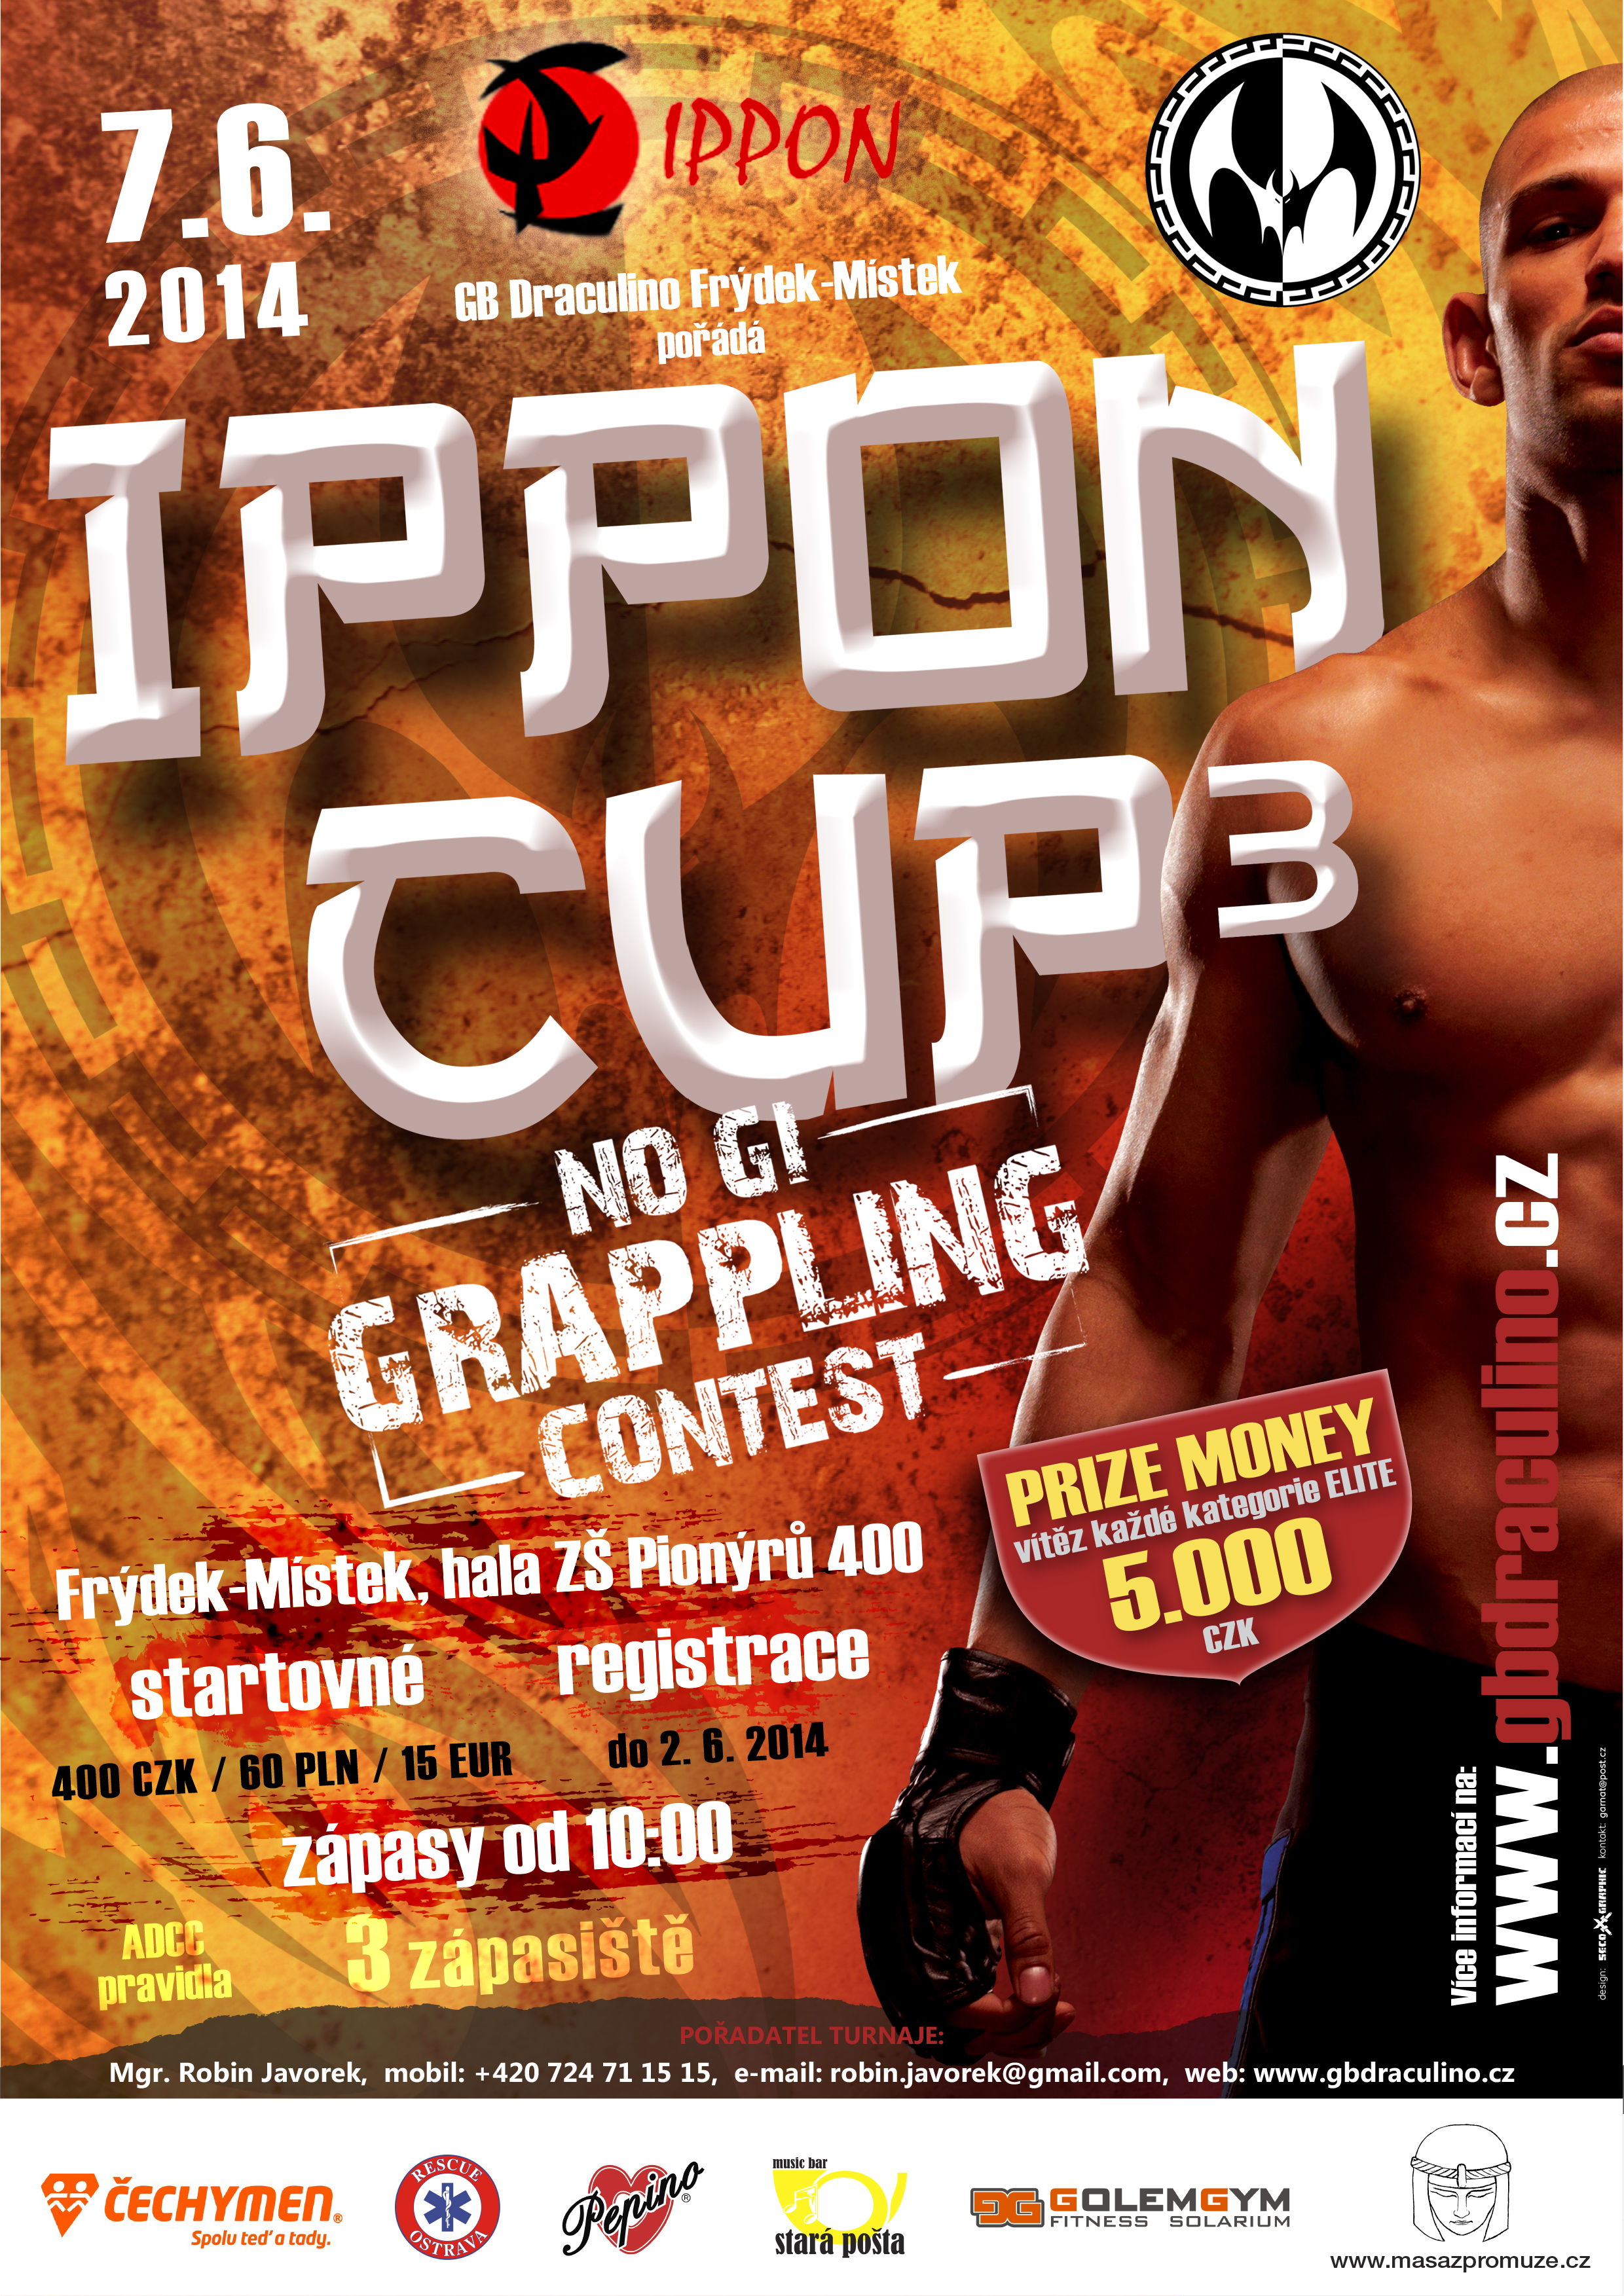 IPPON Cup 3, June 6th, Czech Republic